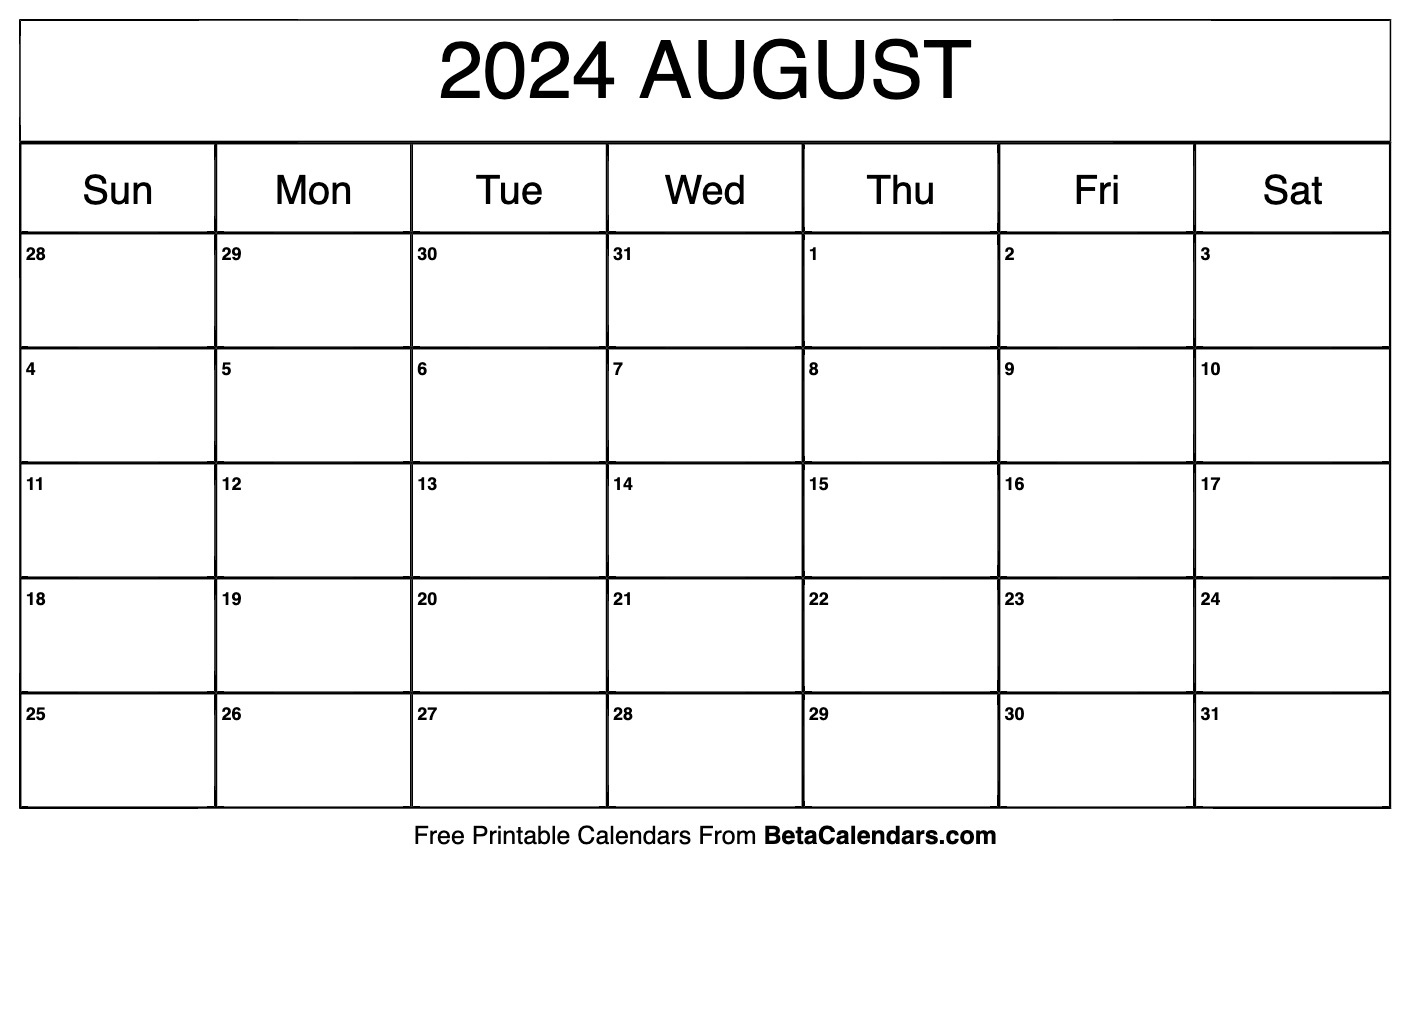 Free Printable August 2024 Calendar regarding Free Printable August 2024 Calendar